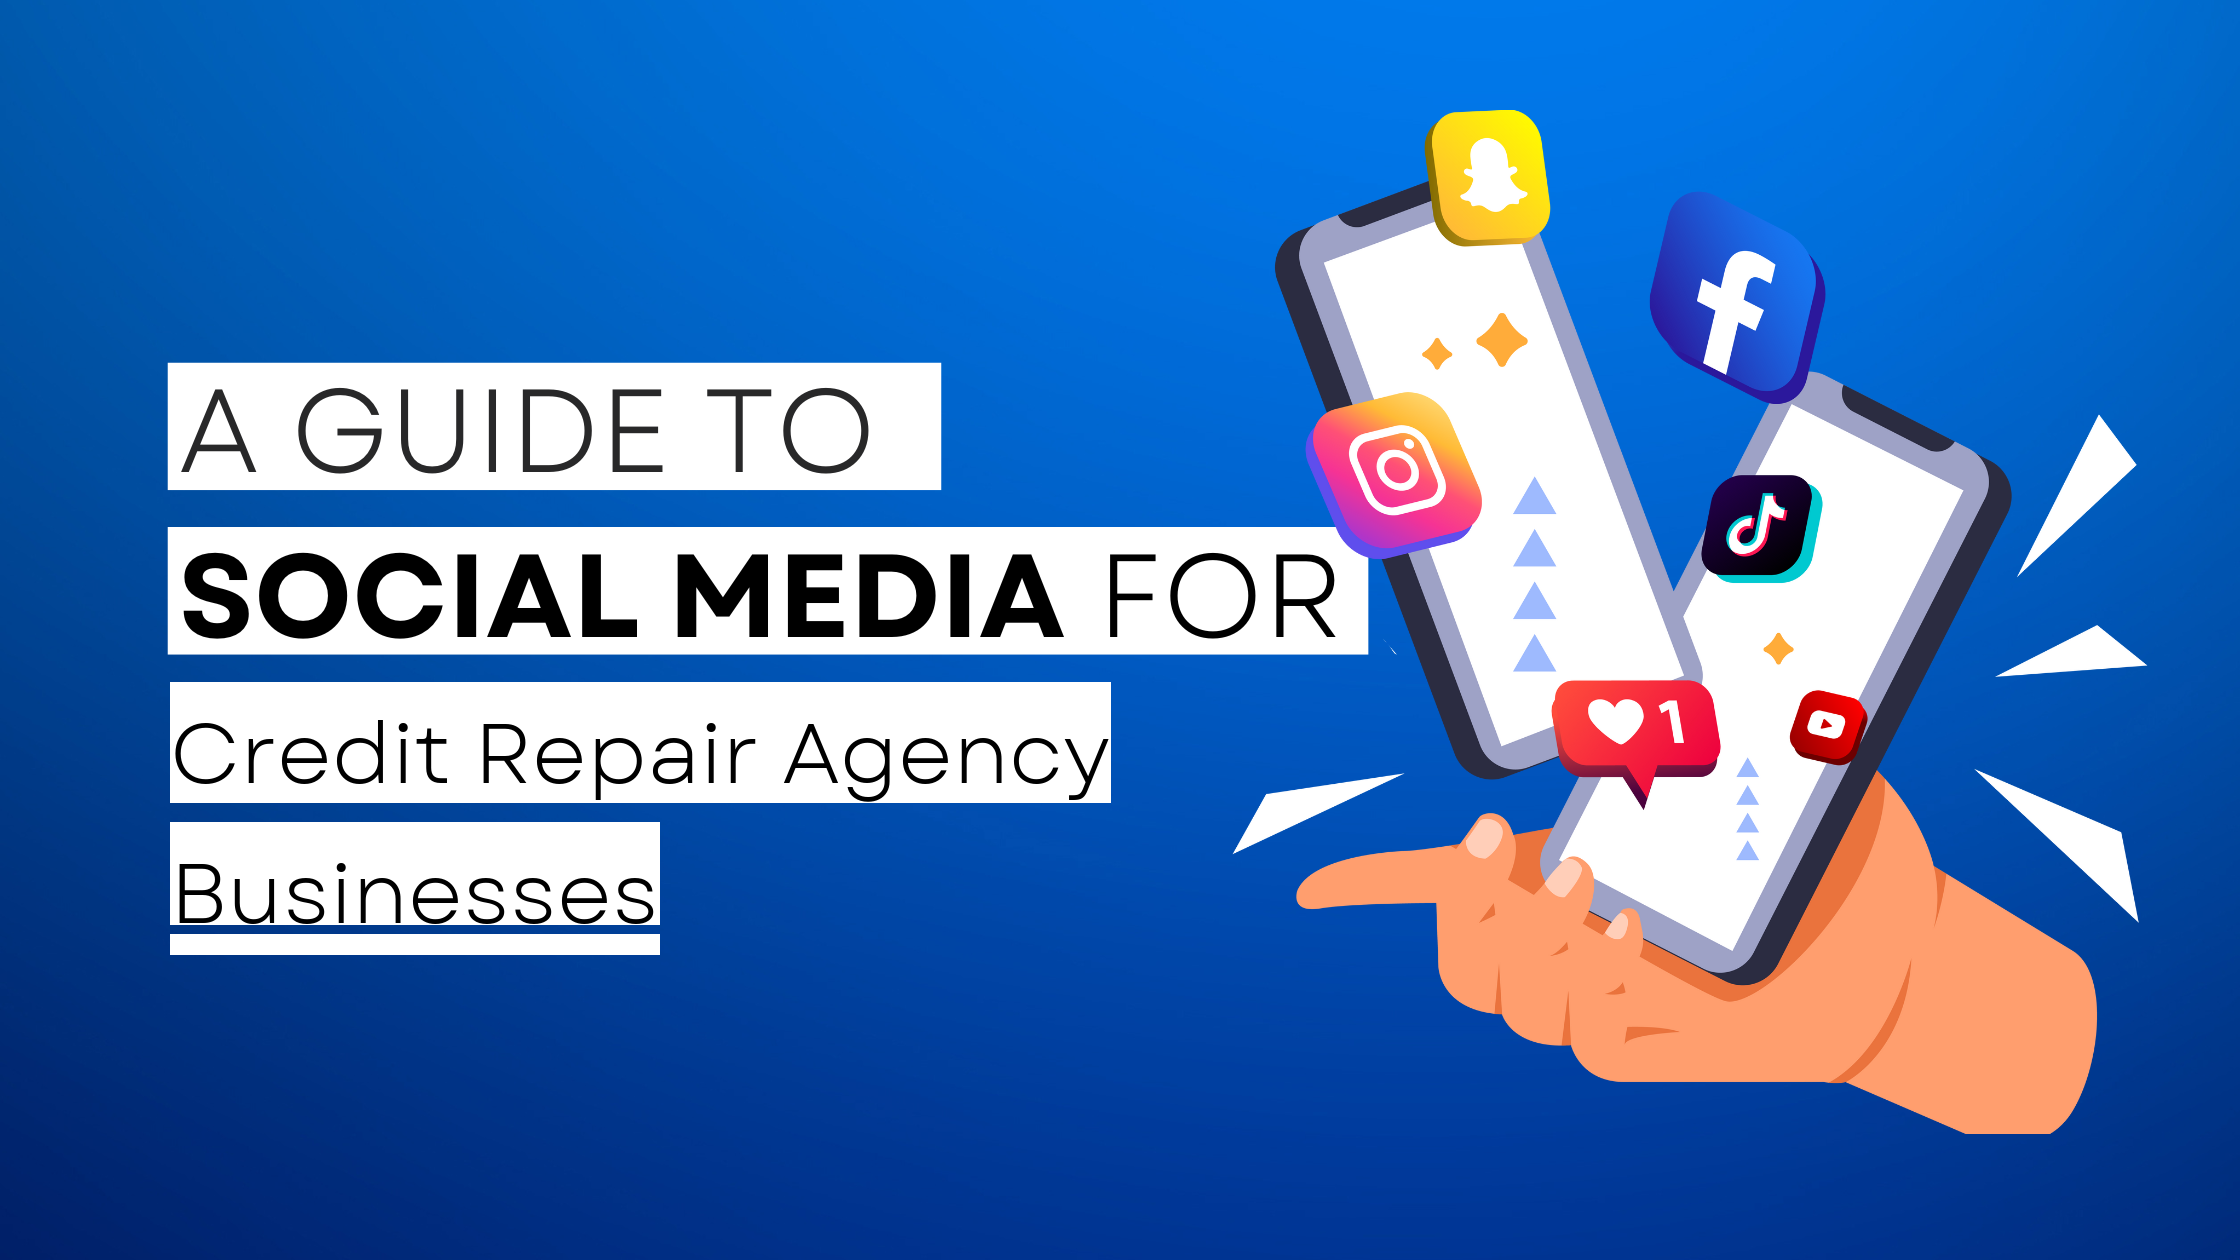 How to start Credit Repair Agency on social media